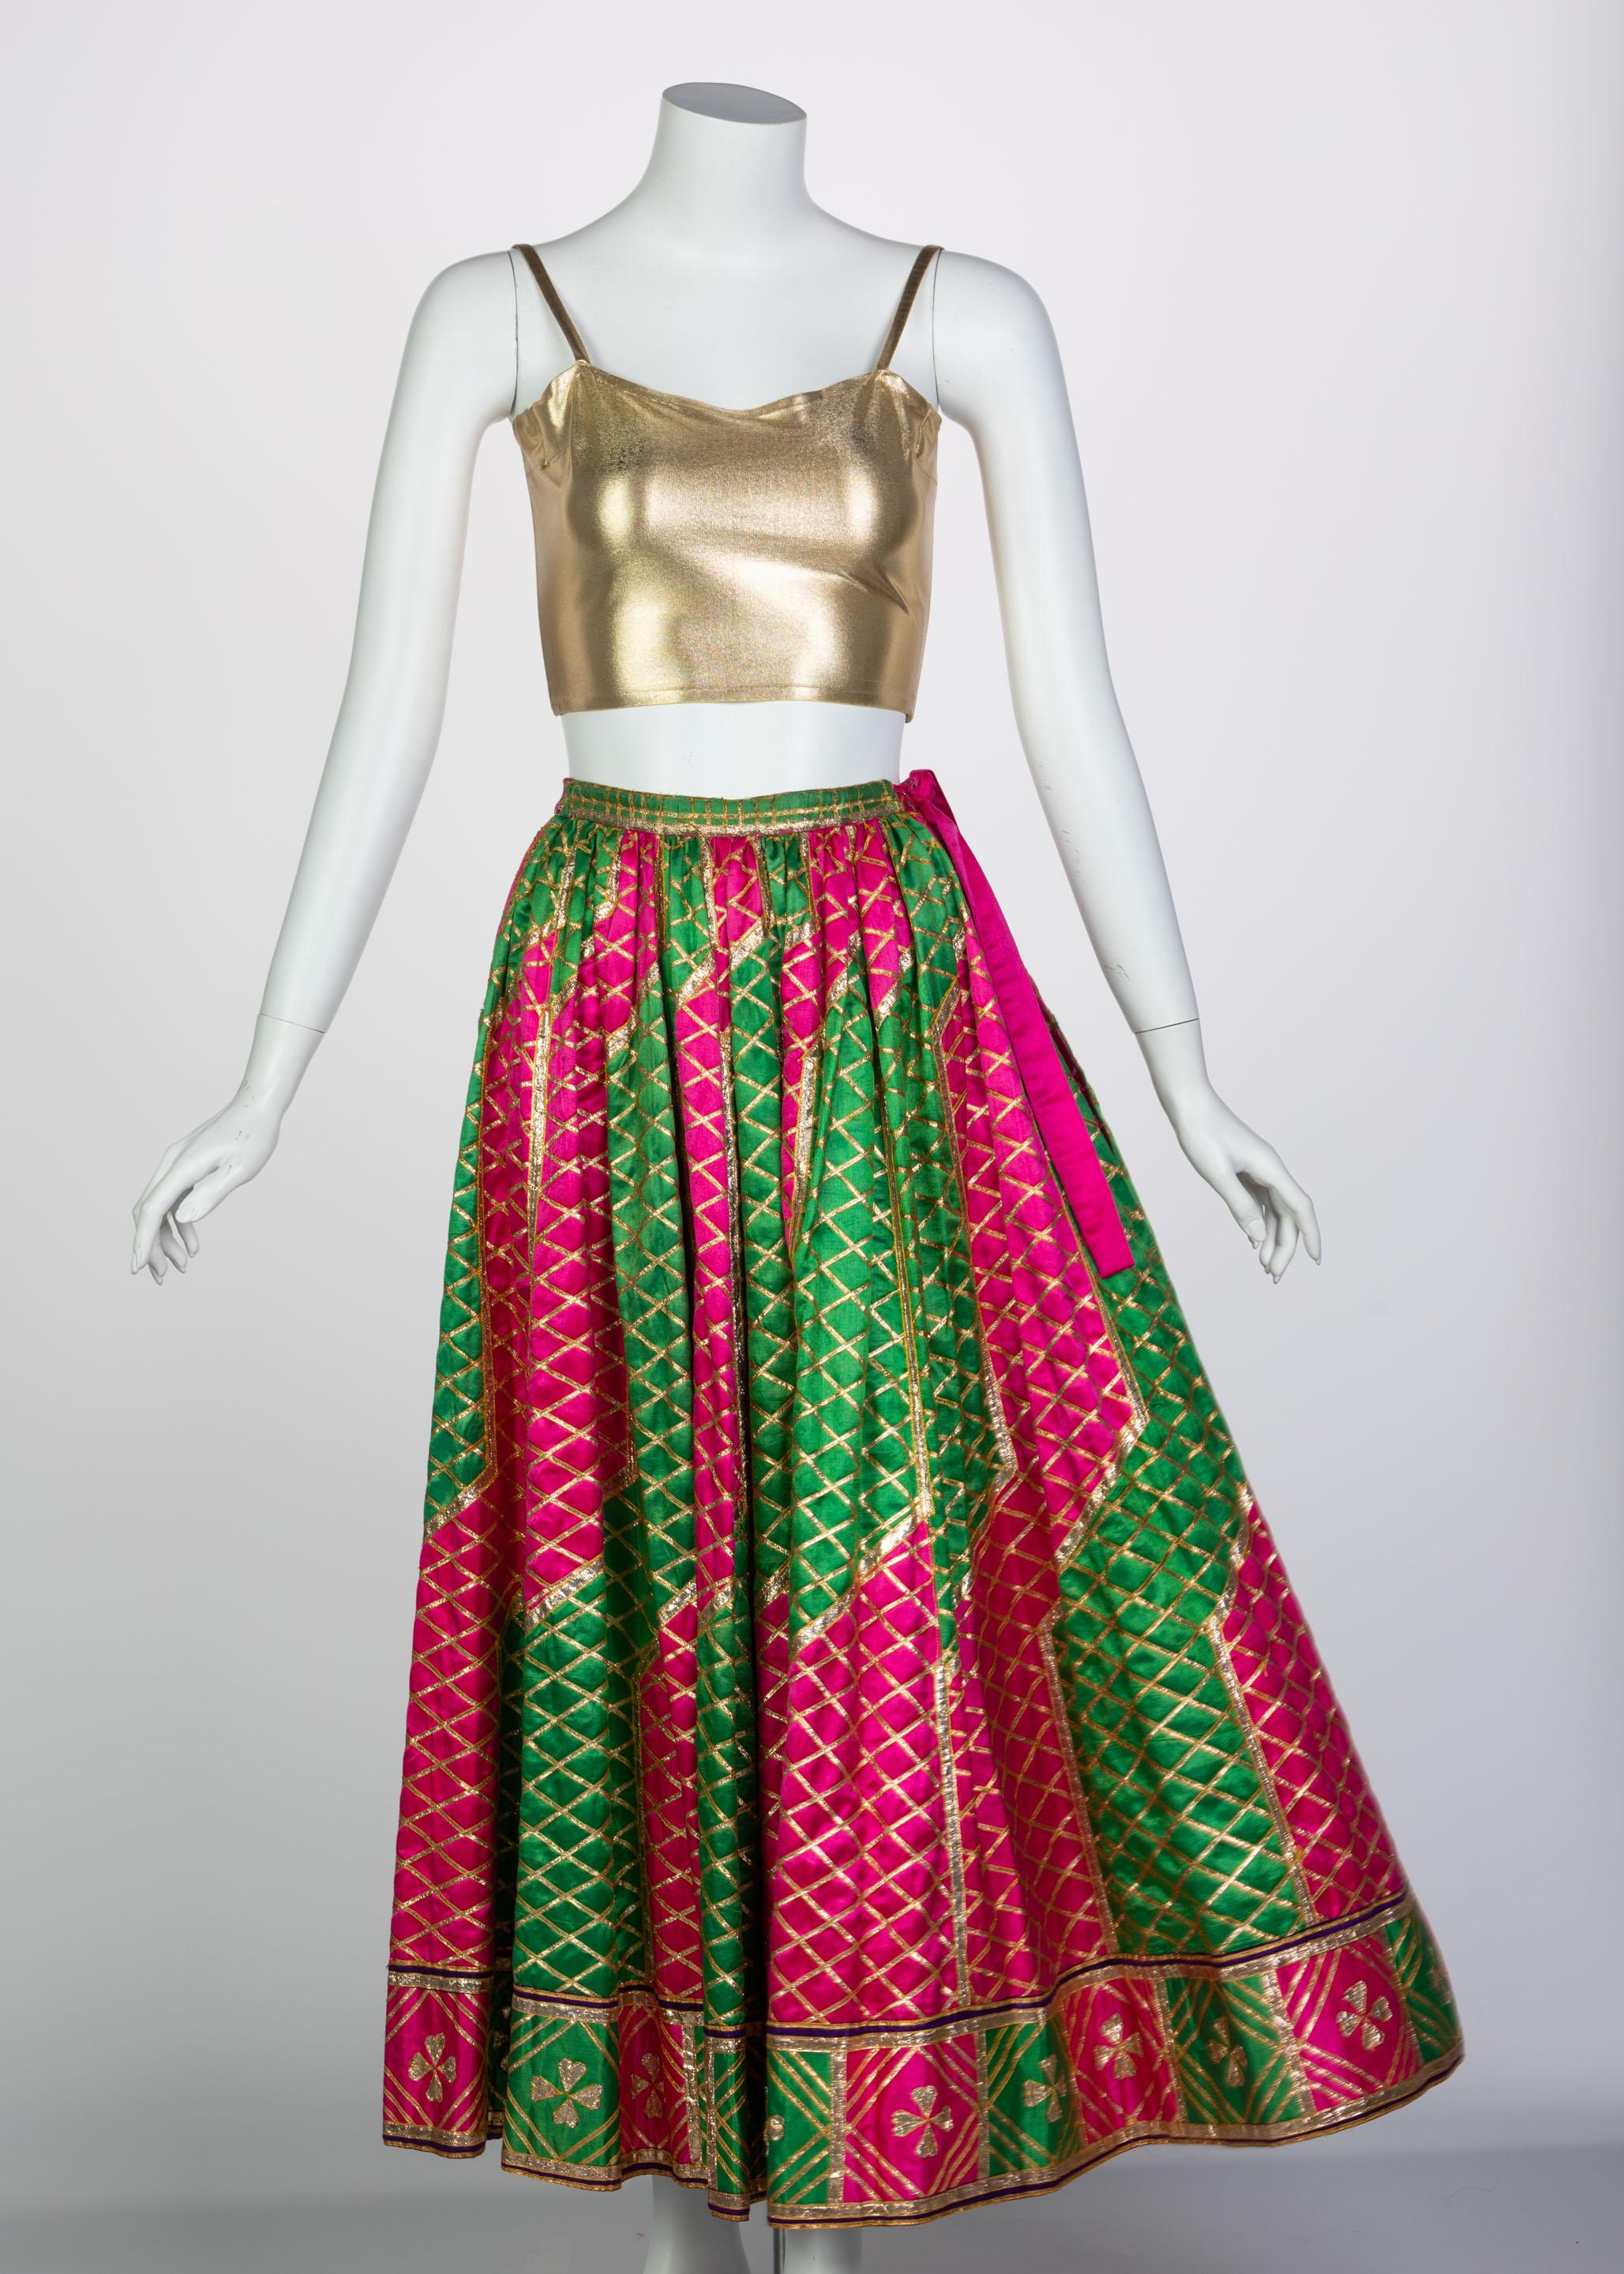 Lanvin Haute Couture Gold Lame Top & Green Pink Peasant Skirt Ensemble, 1977 5